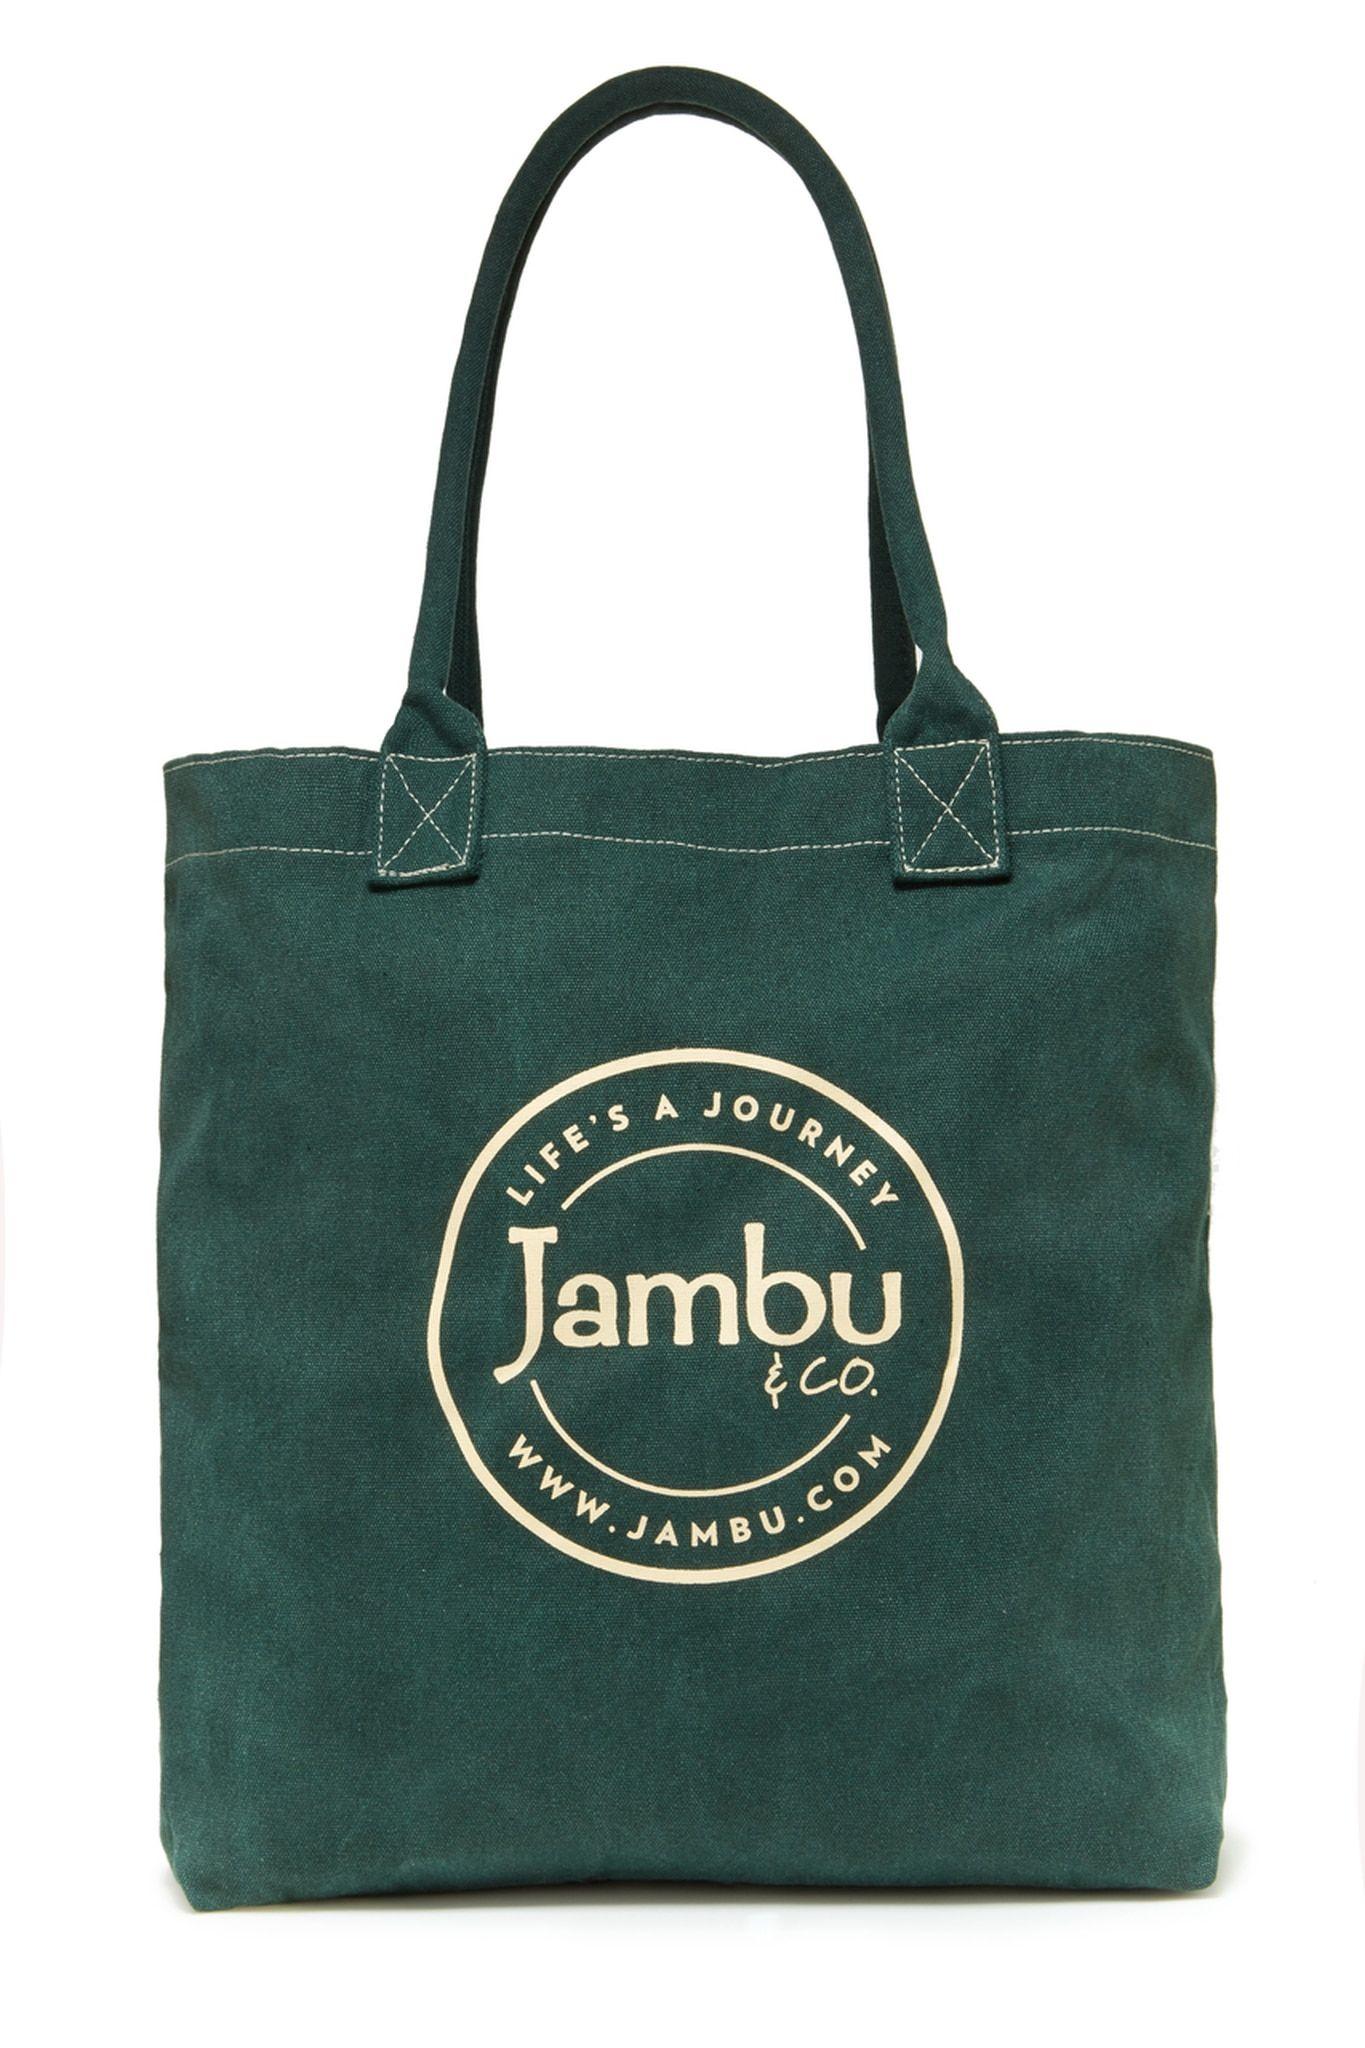 Jambu Logo - Gift With Purchase Tote Bag - Jambu.com